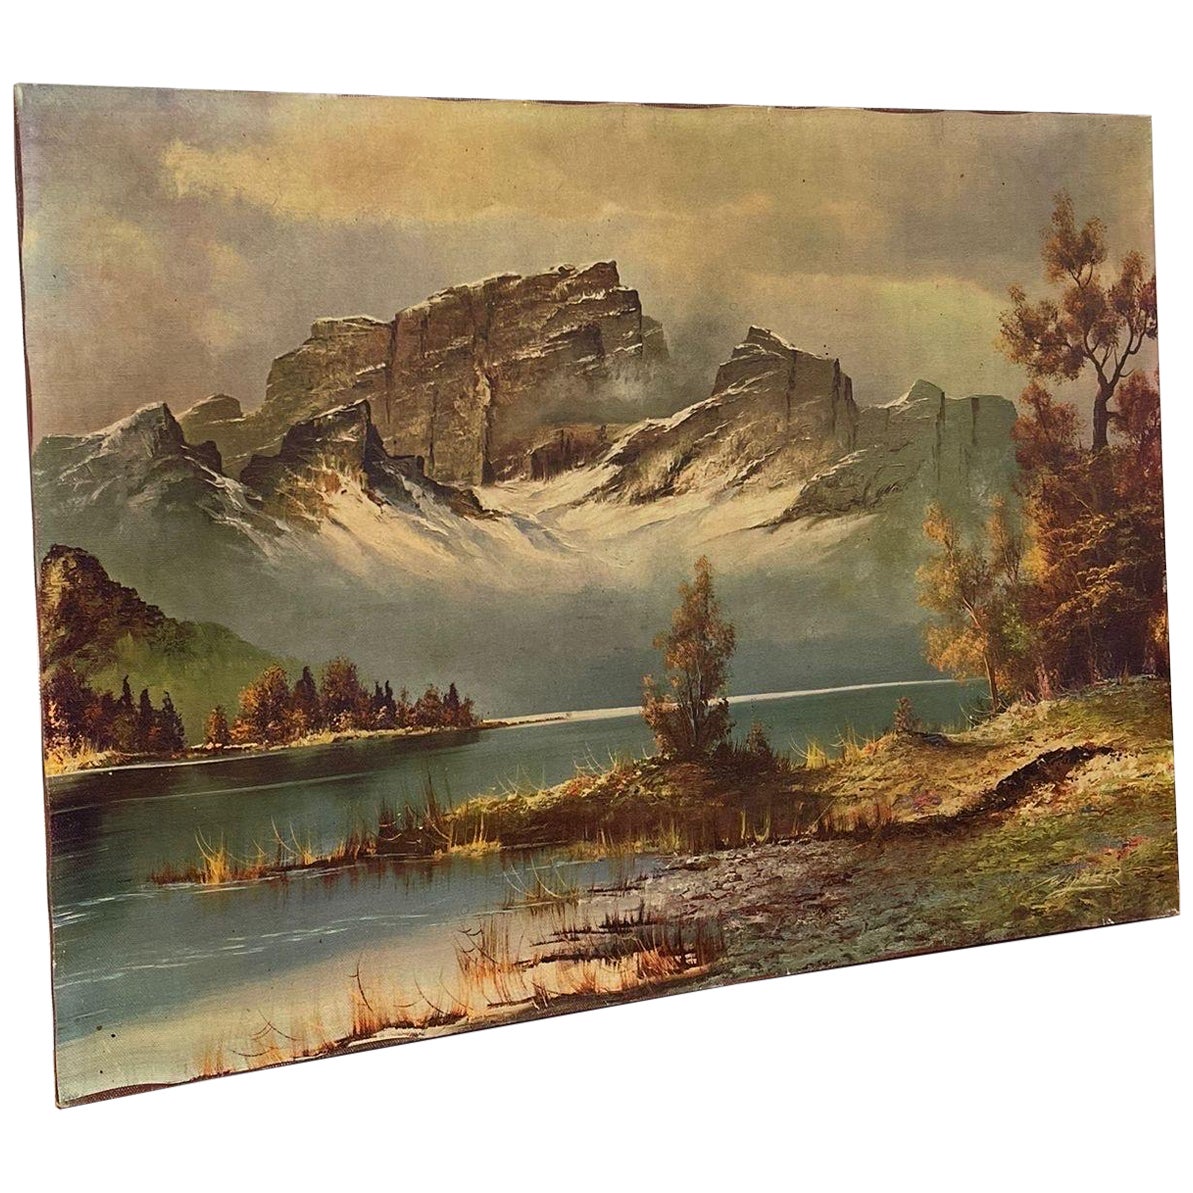 Vintage Landscape Print on Canvas. Mountains Over a Lake. For Sale